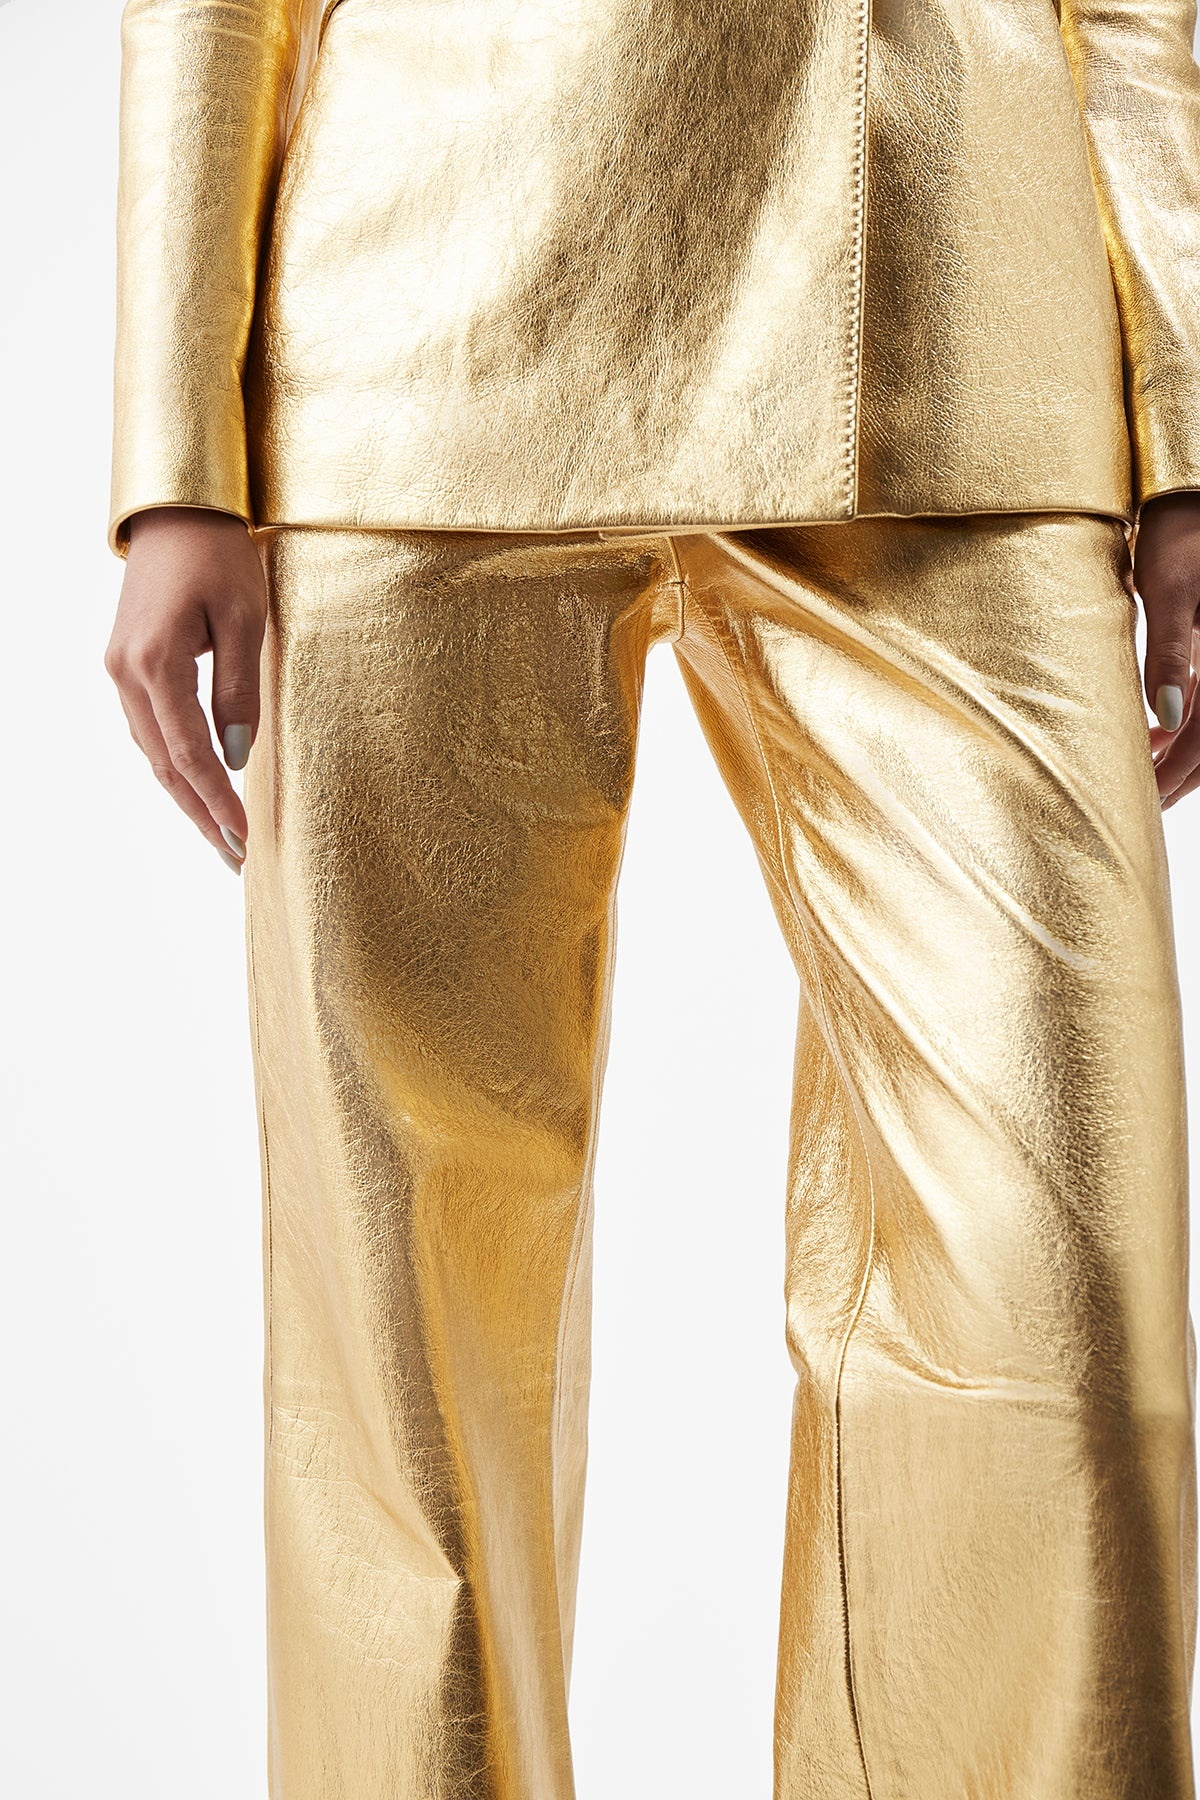 Vesta Pant in Gold Leather - 6